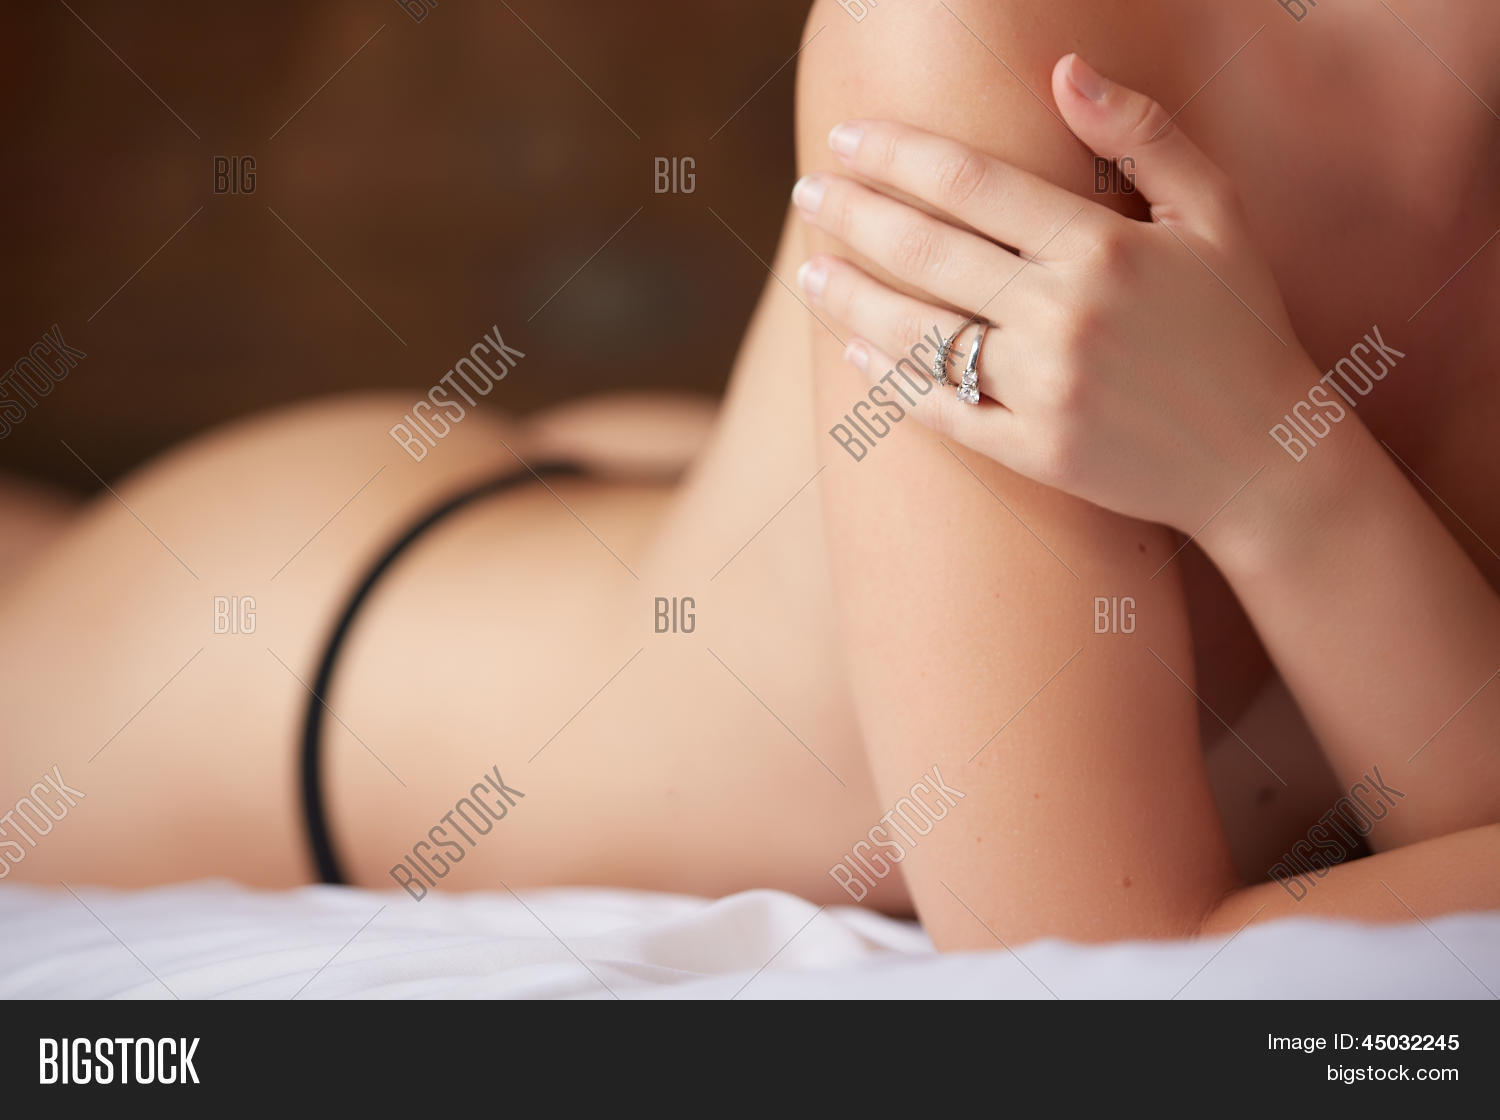 alexandra schween recommends adult erotic pix pic